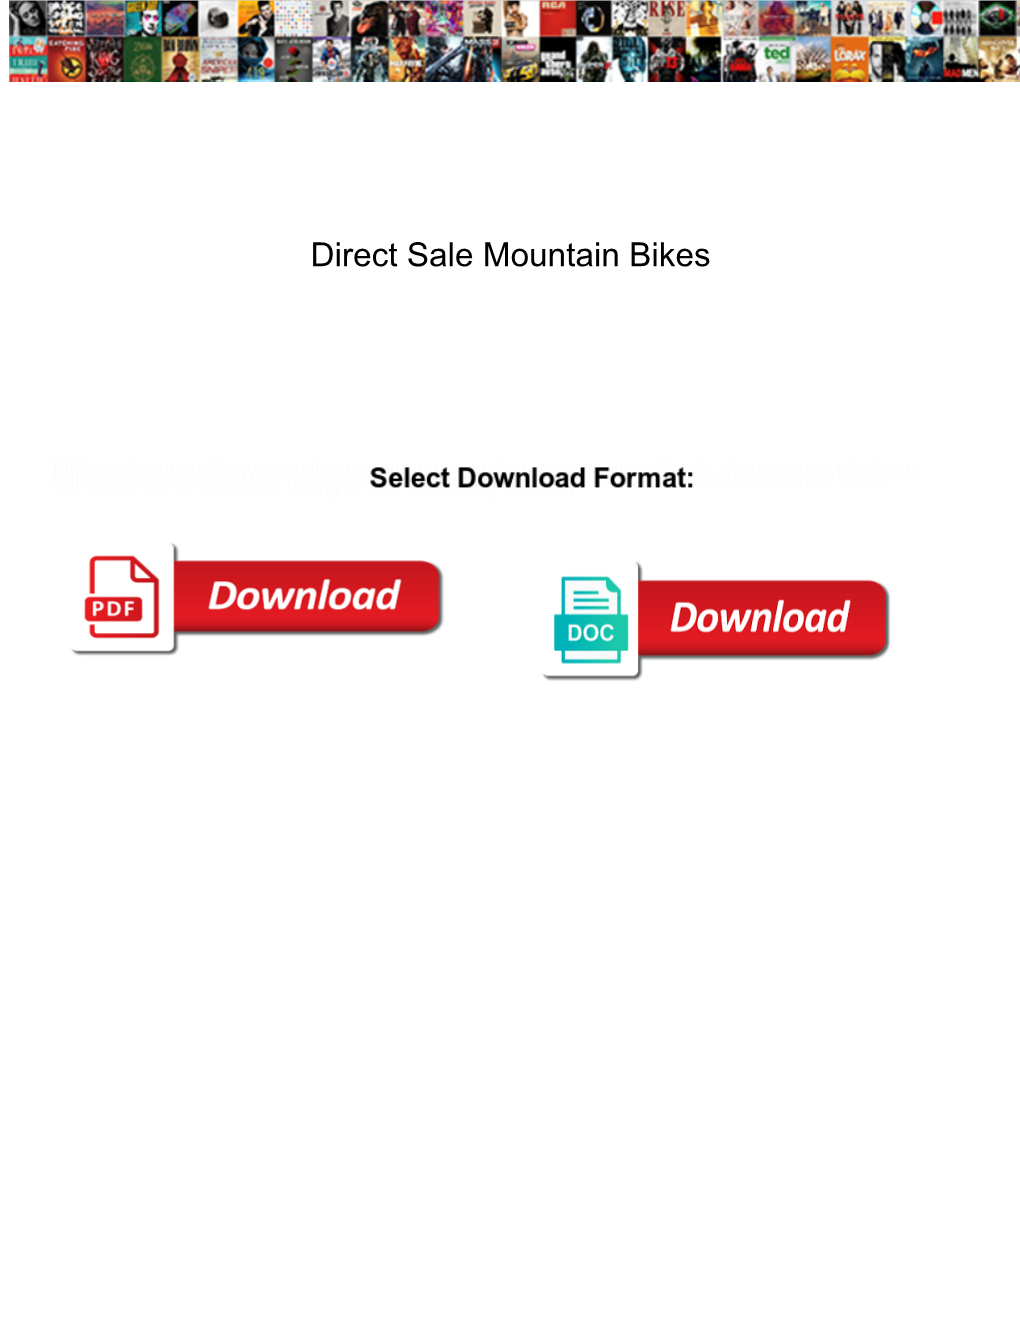 Direct Sale Mountain Bikes